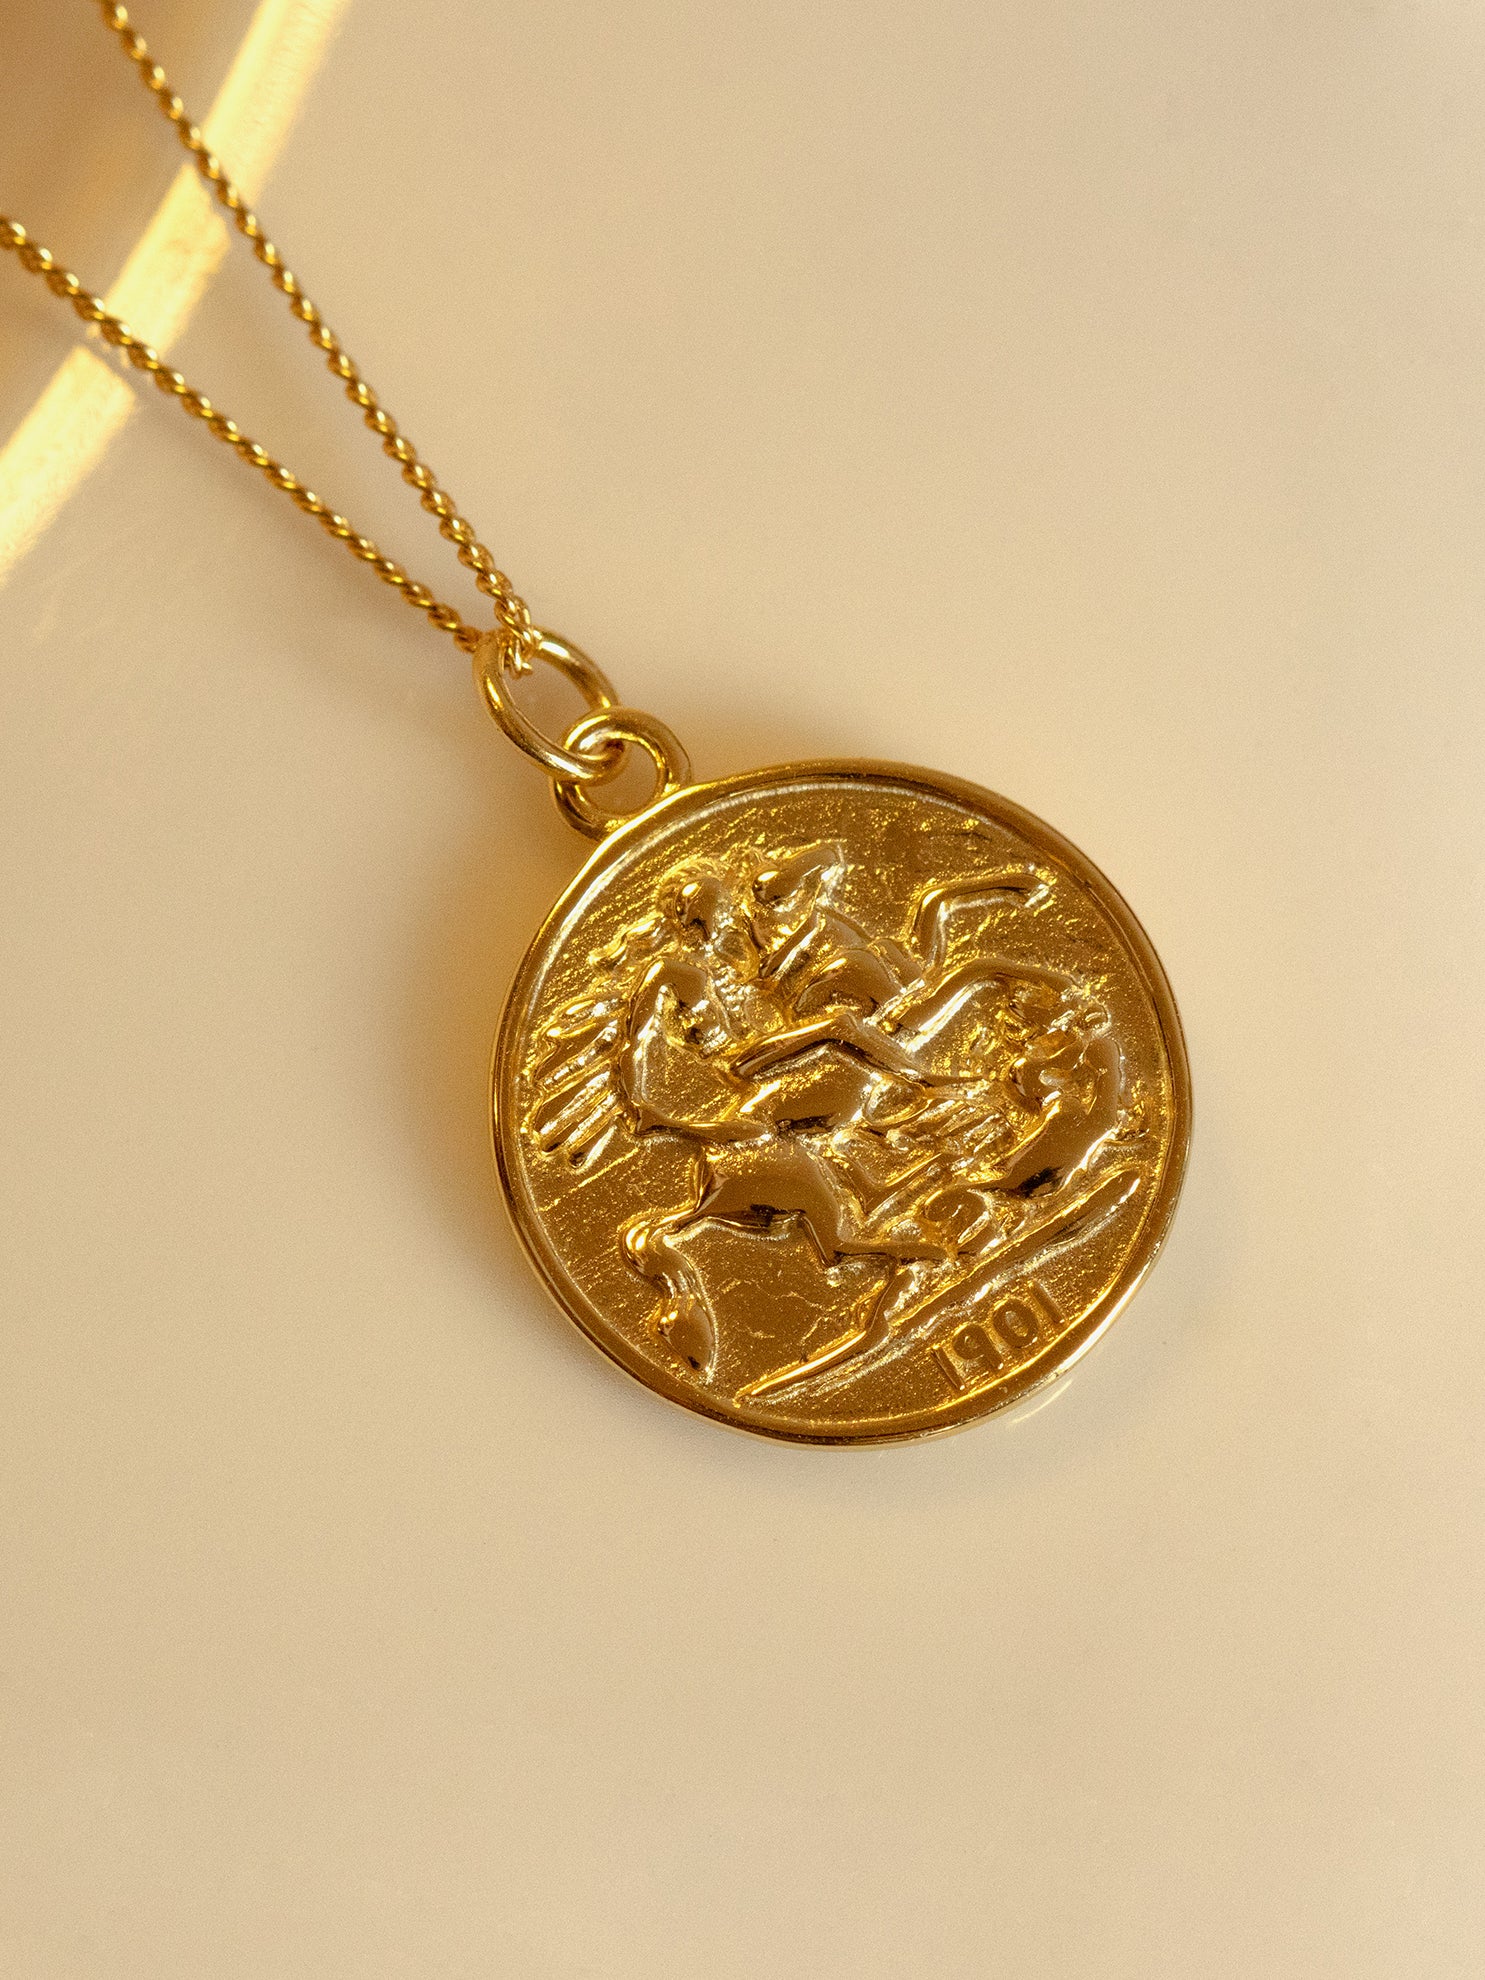 Roman Coin Necklace - Reversible